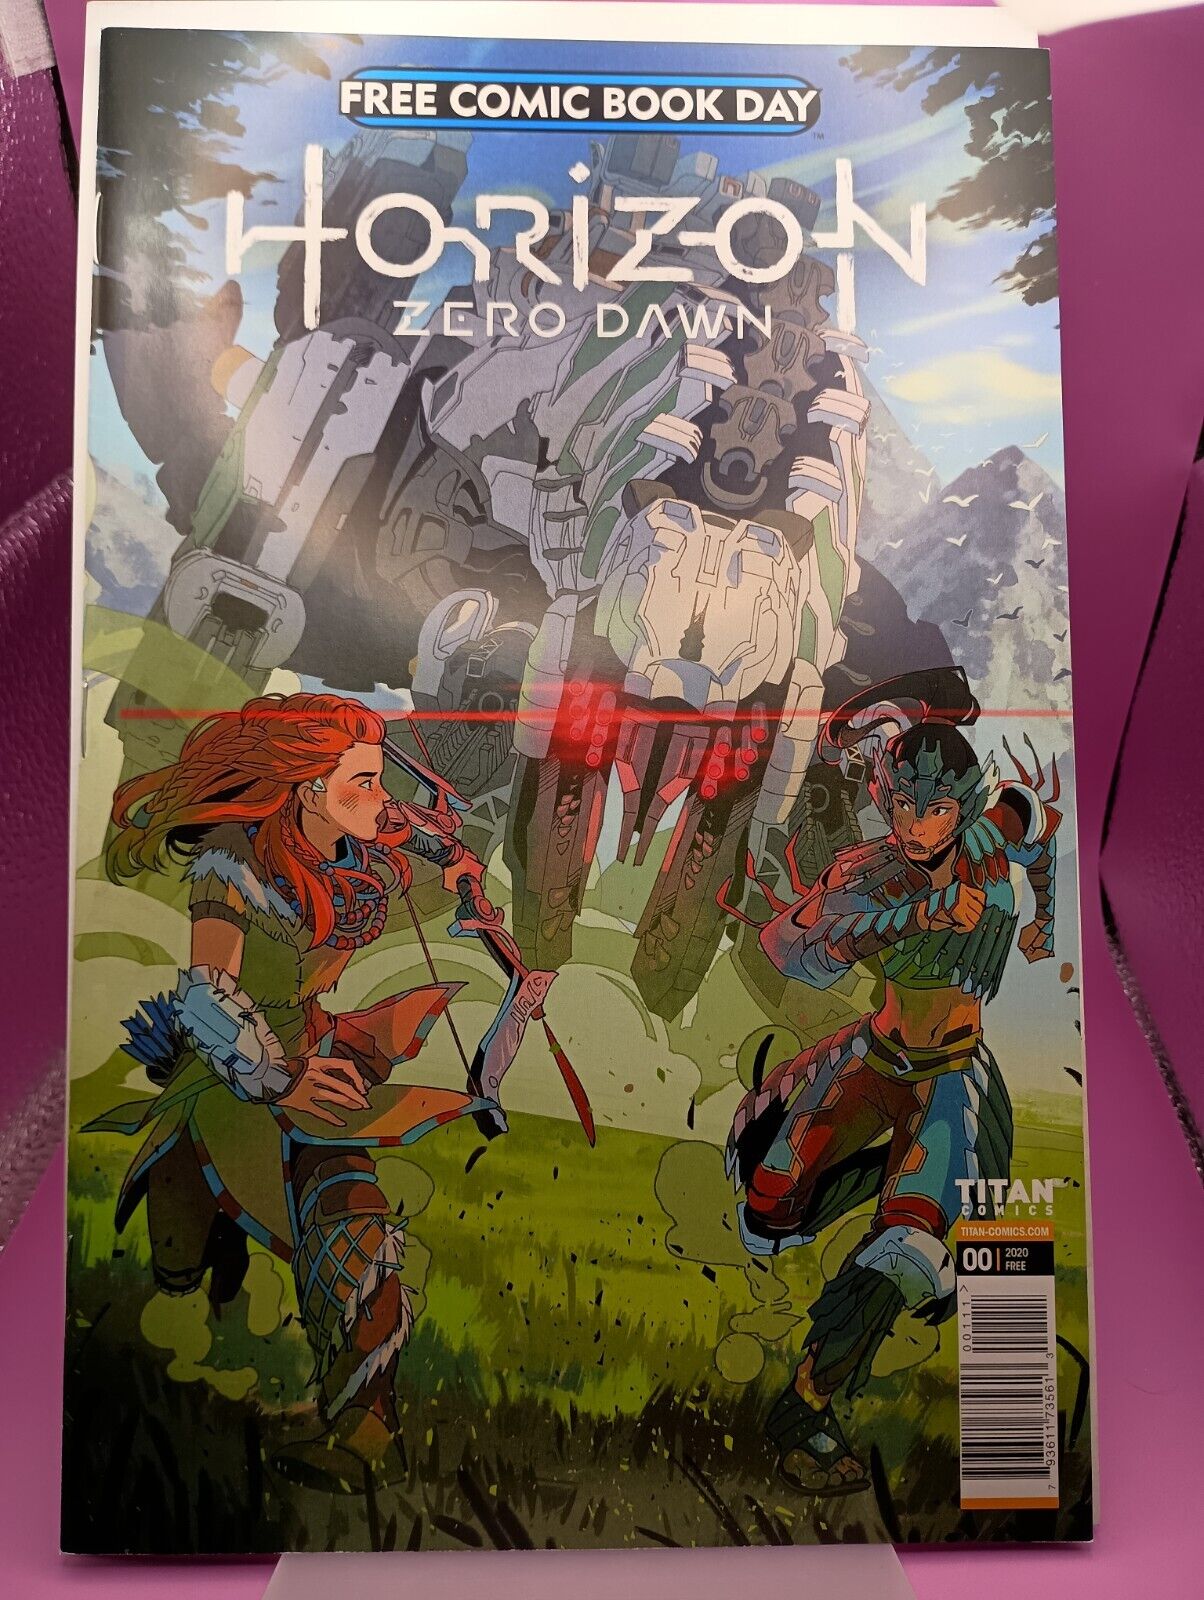 UNSTAMPED 2020 FCBD Horizon Zero Dawn Promotional Giveaway Comic Book FREE SHPNG